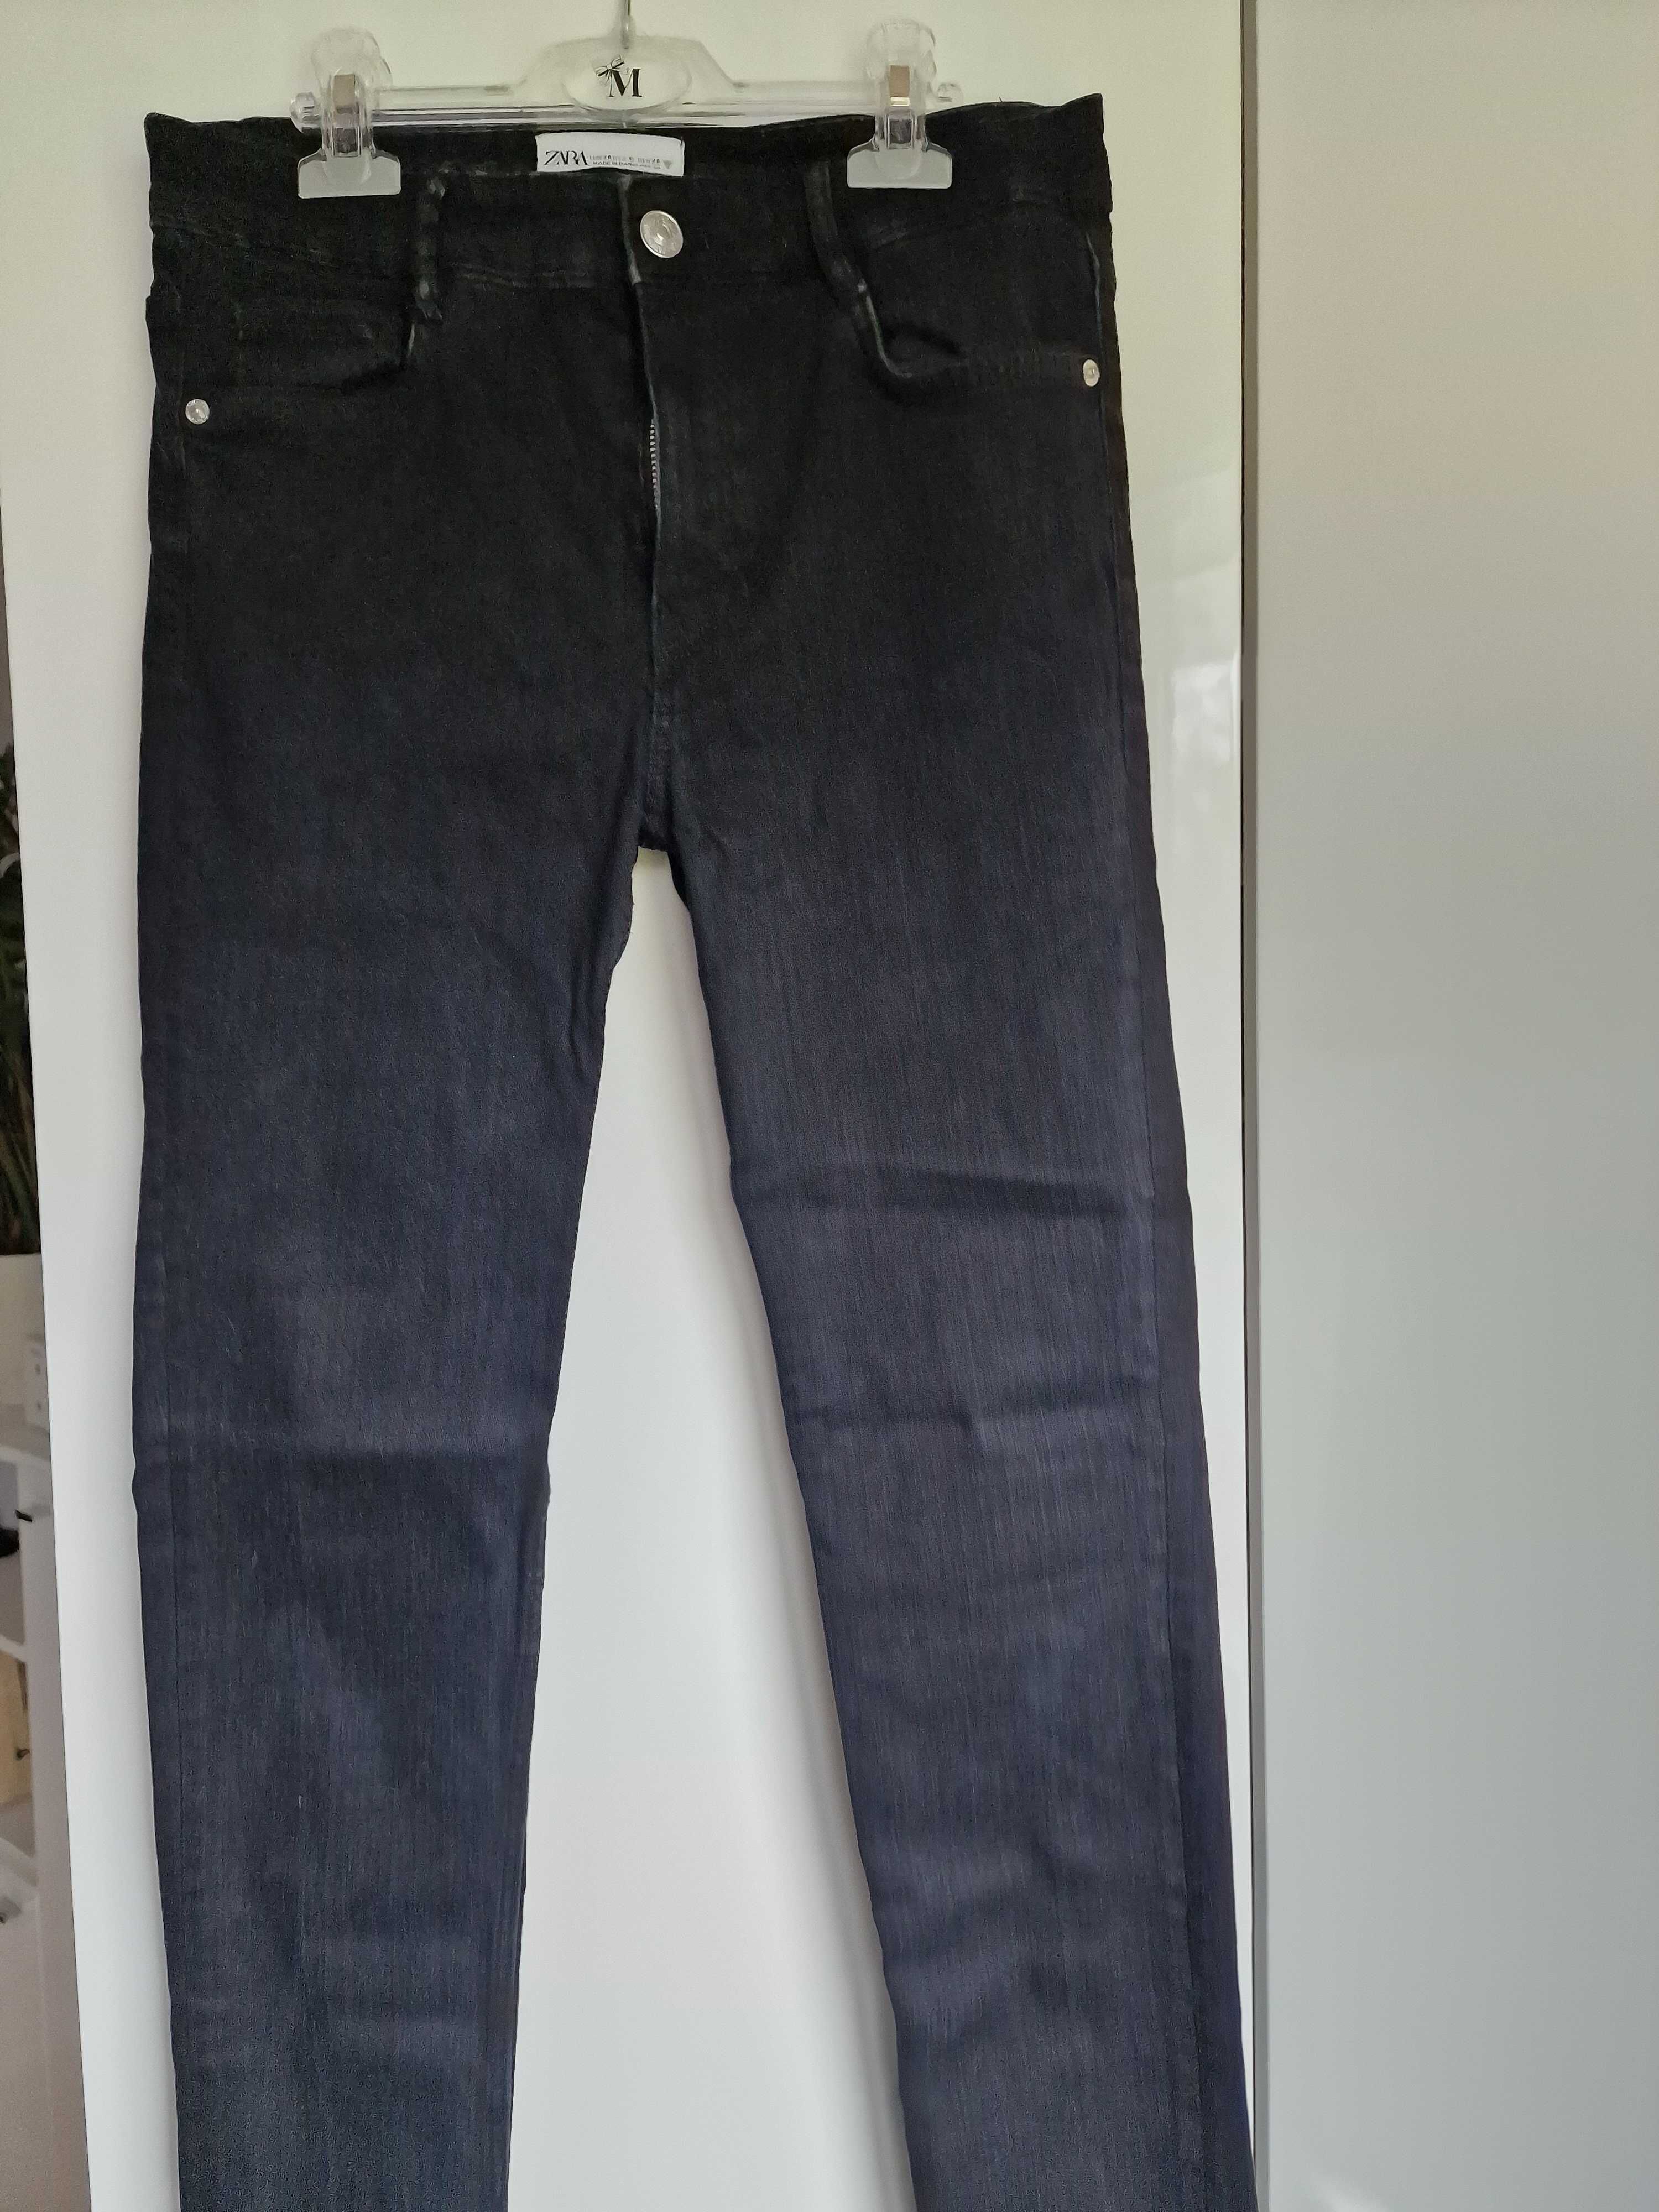 Spodnie jeans Zara r.38